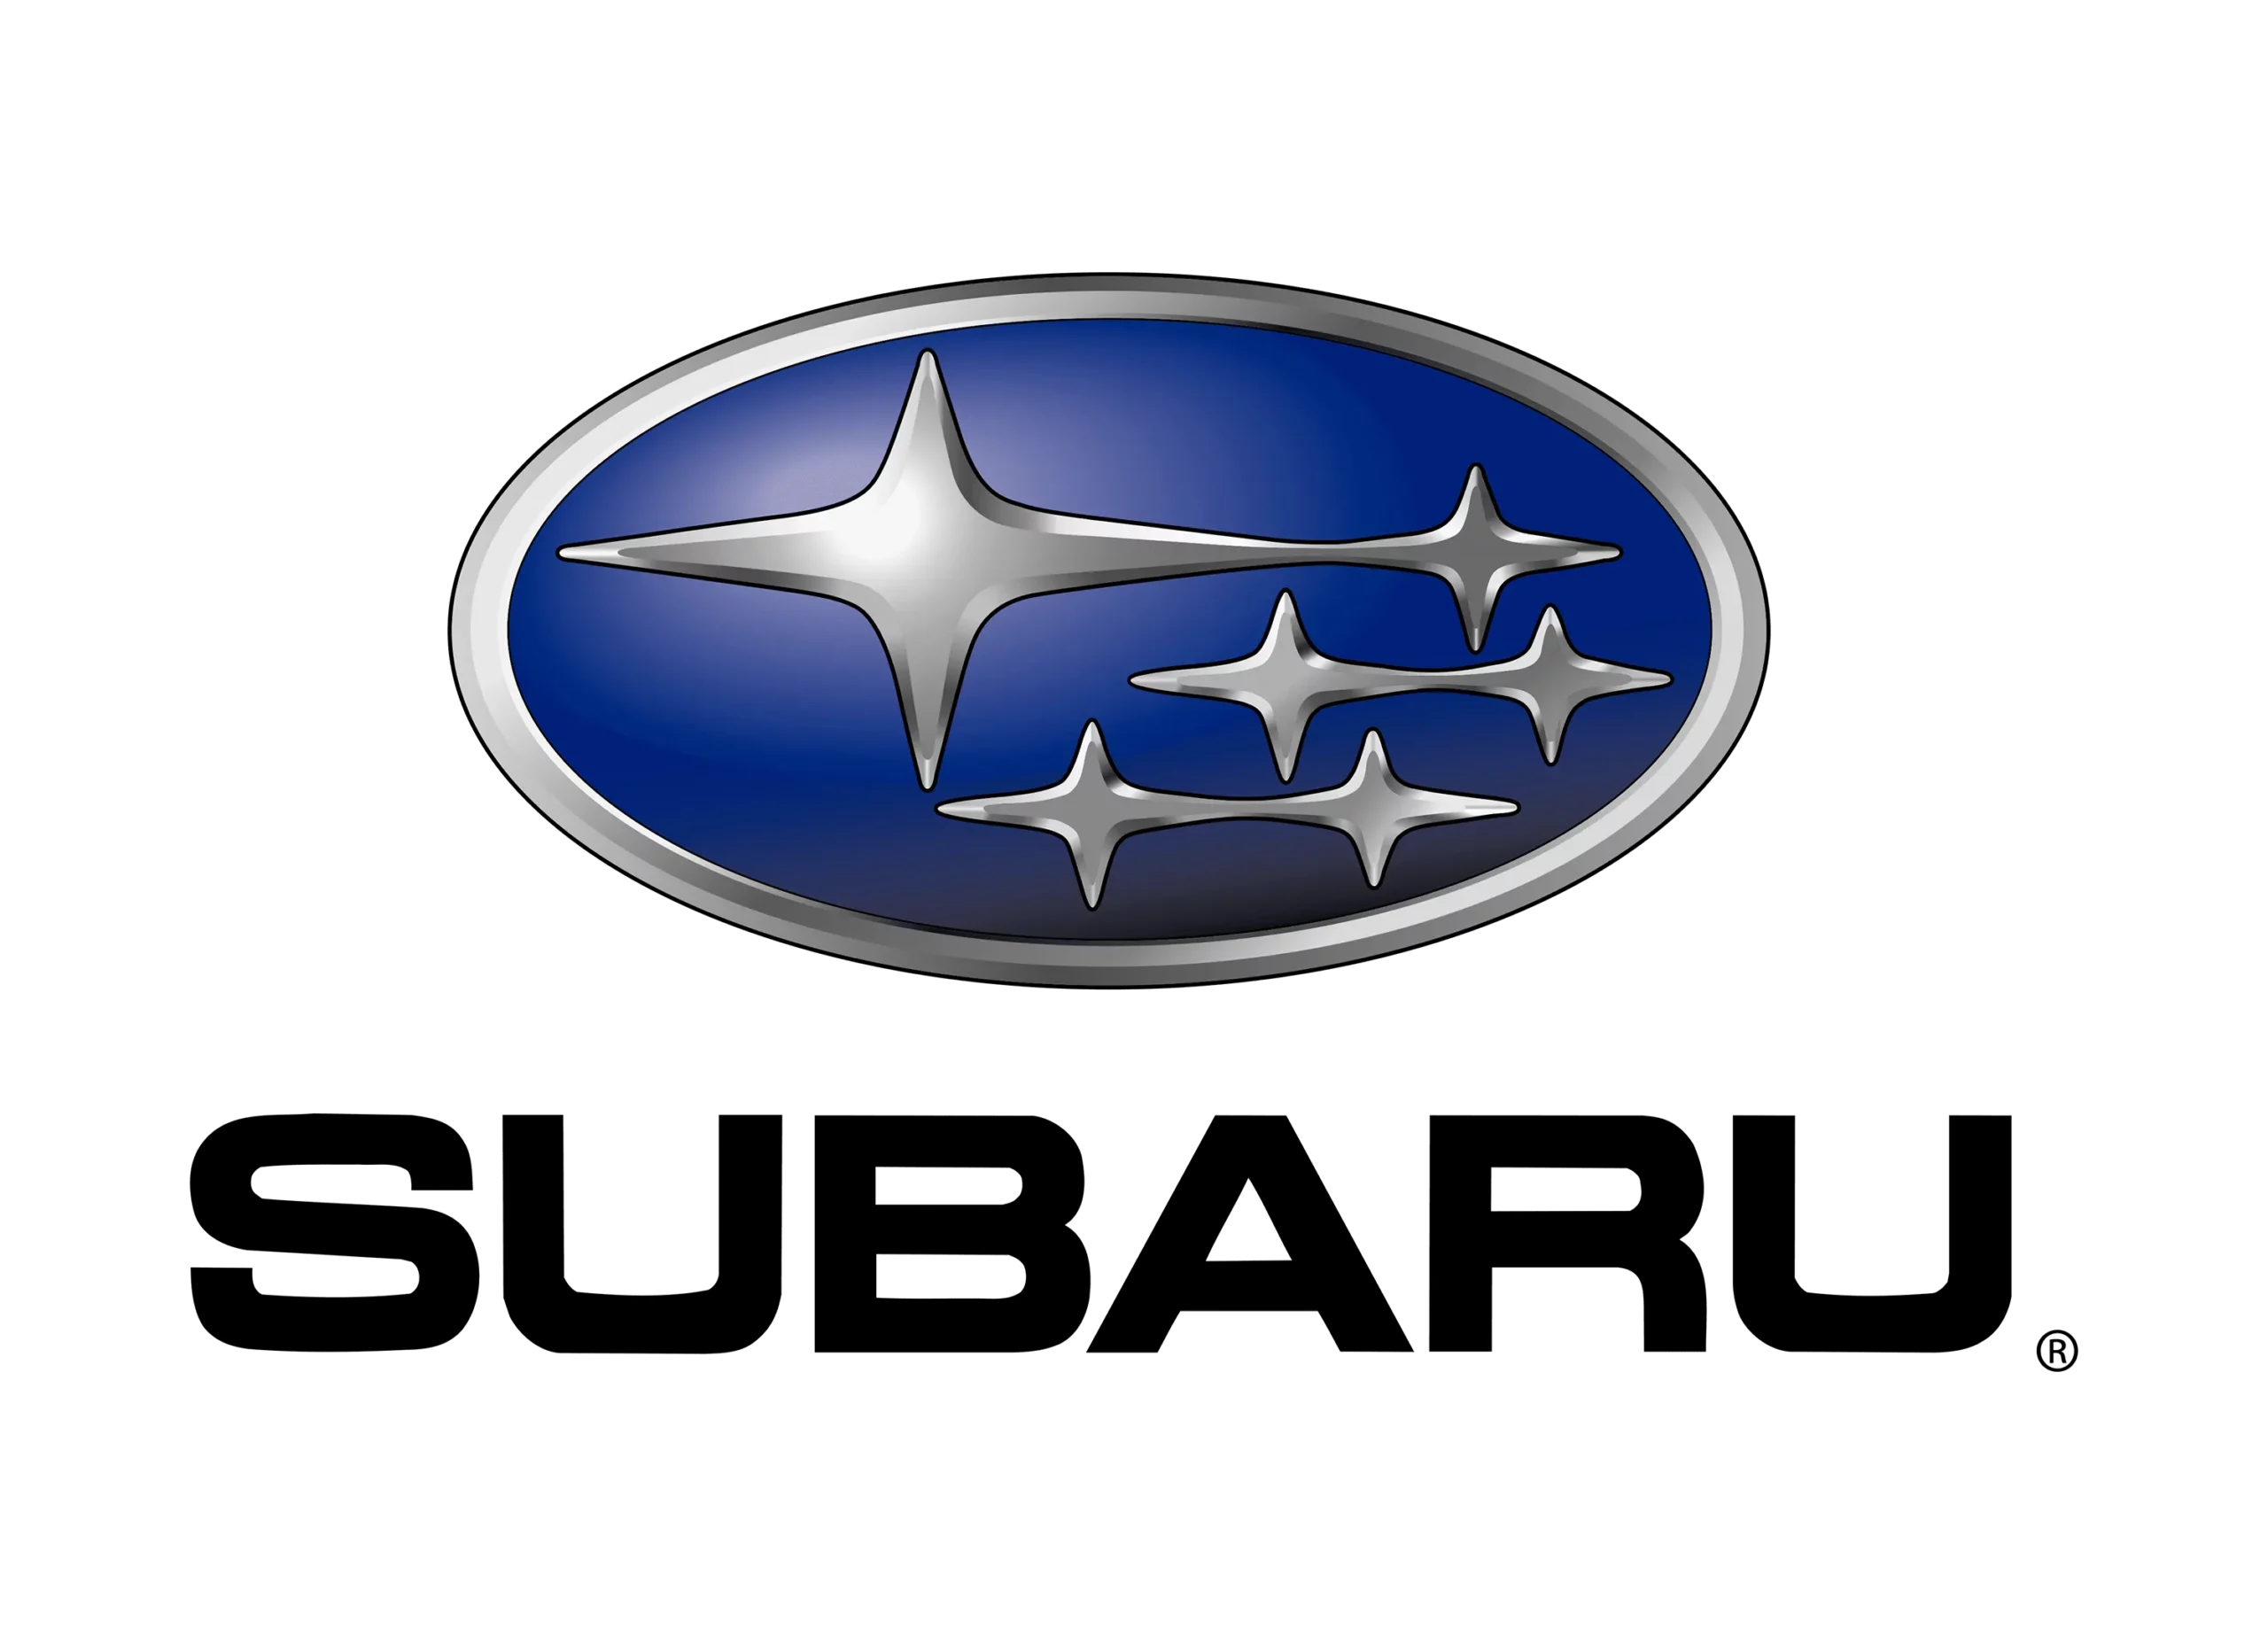 Subaru logo 2003-2019